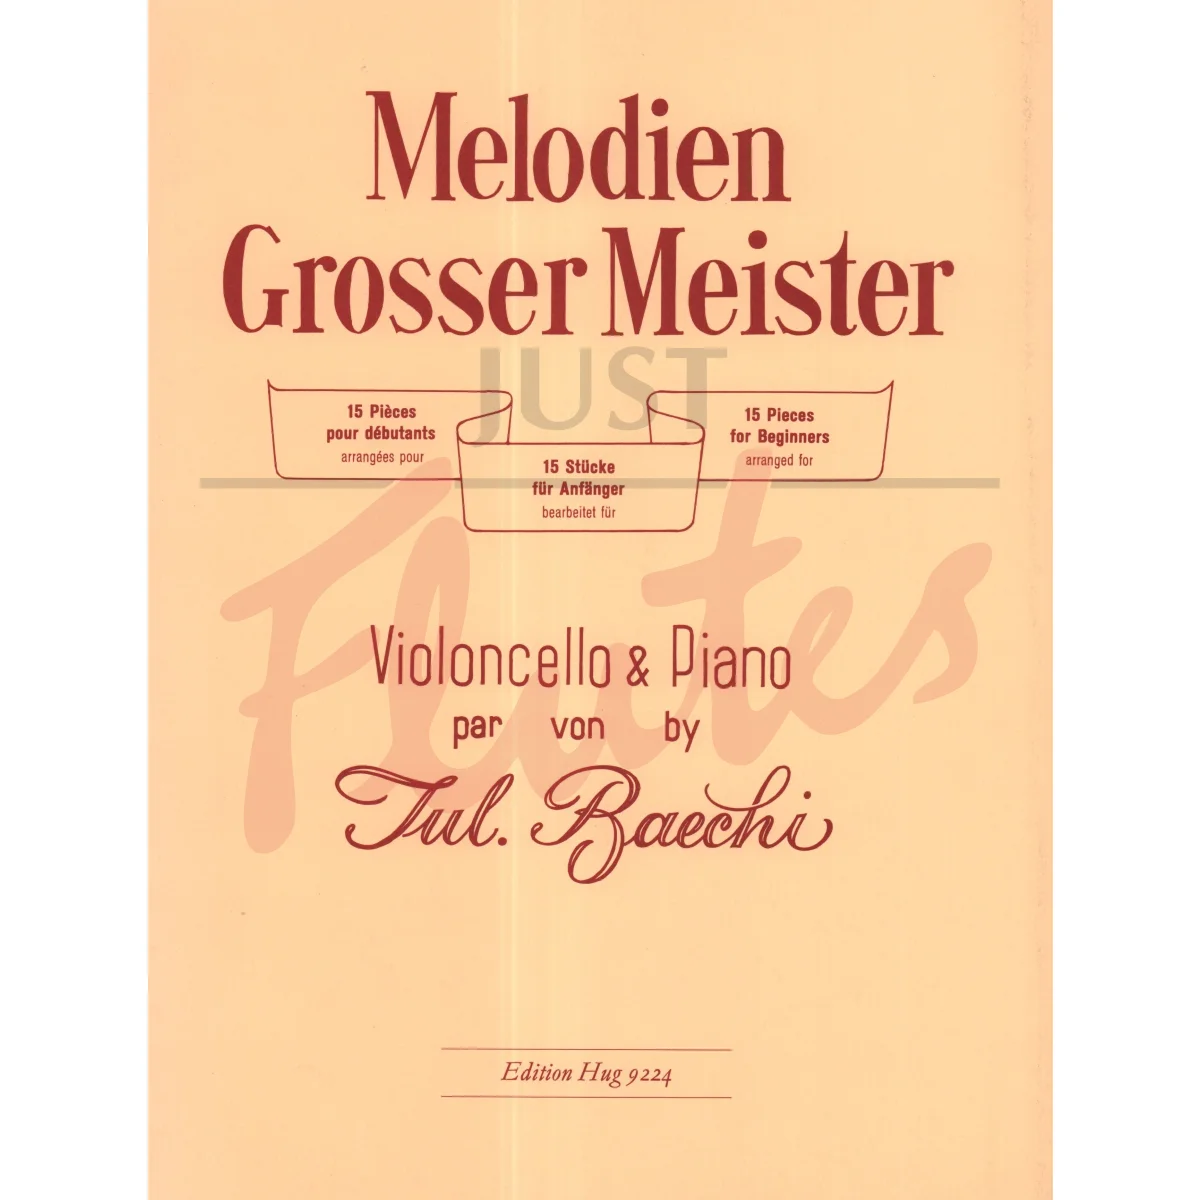 Melodien Grosser Meister